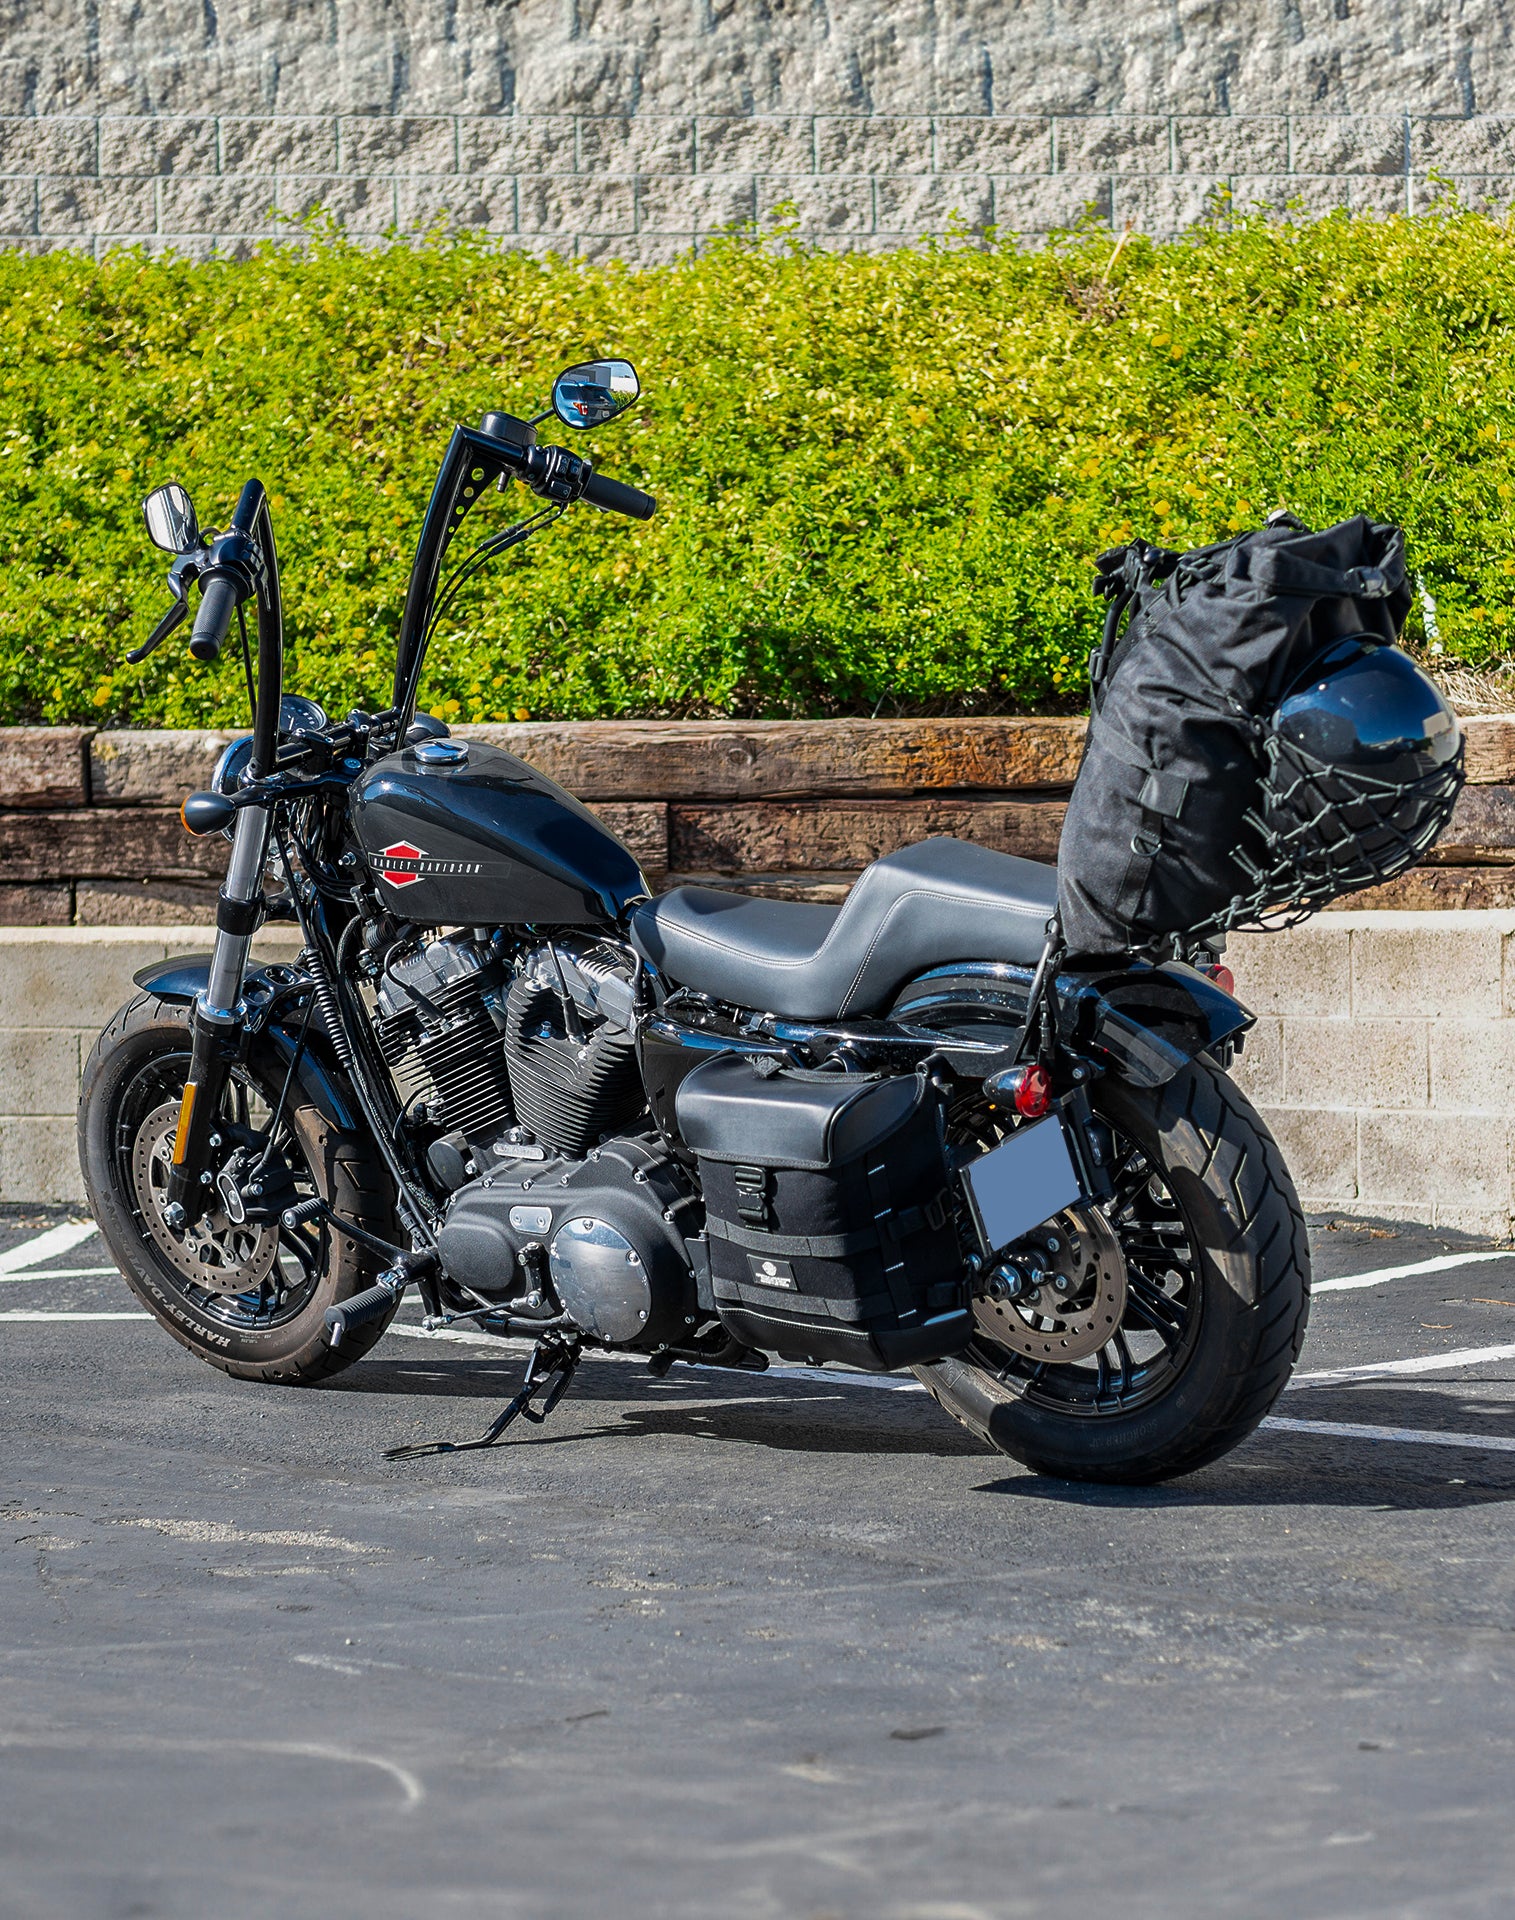 32L - Vanguard Large Dry Yamaha Motorcycle Tail Bag